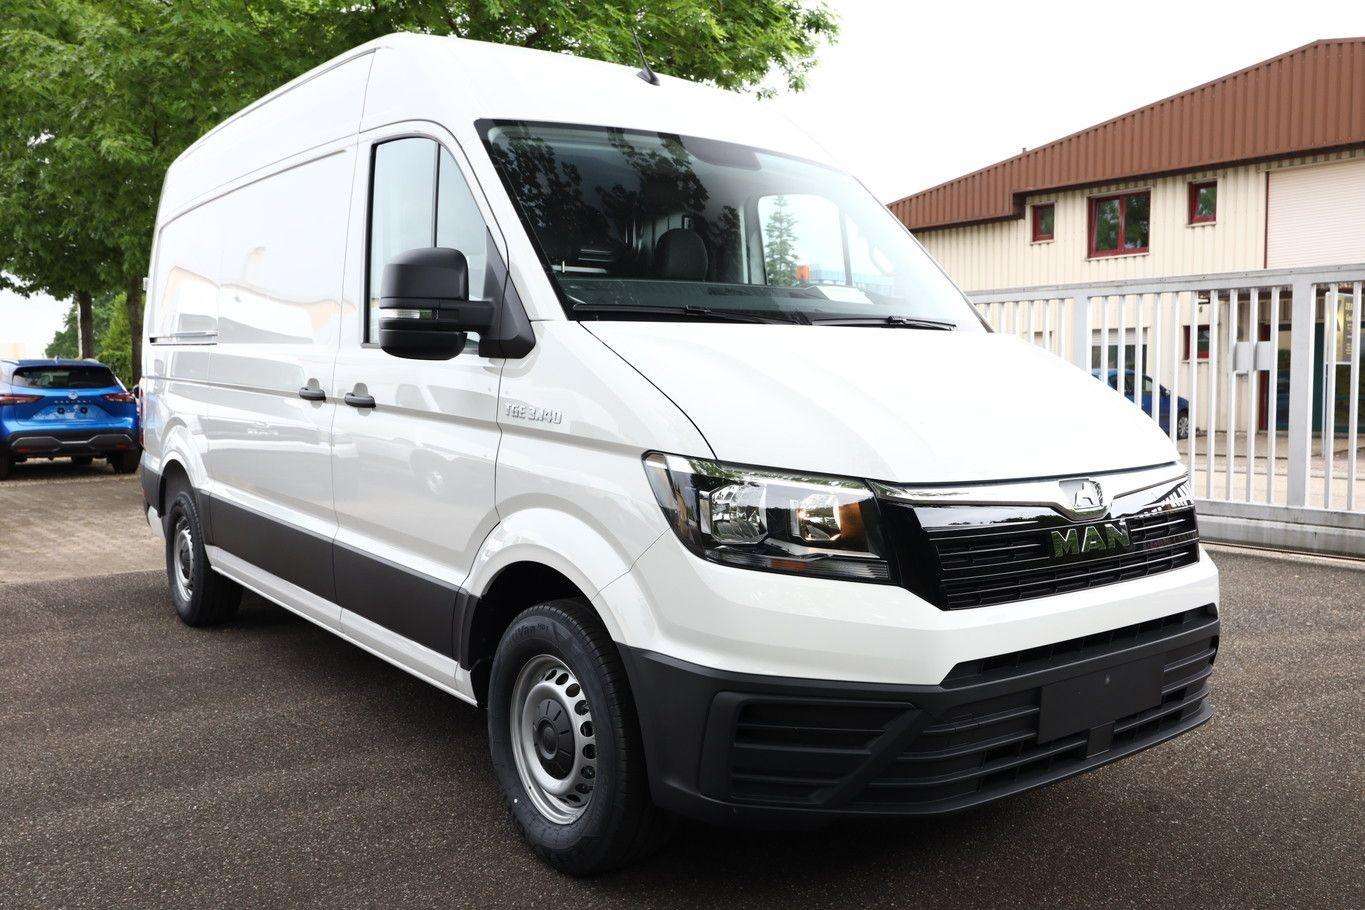 MAN TGE Van in White pre-registered in Osnabrück for € 40,729.-